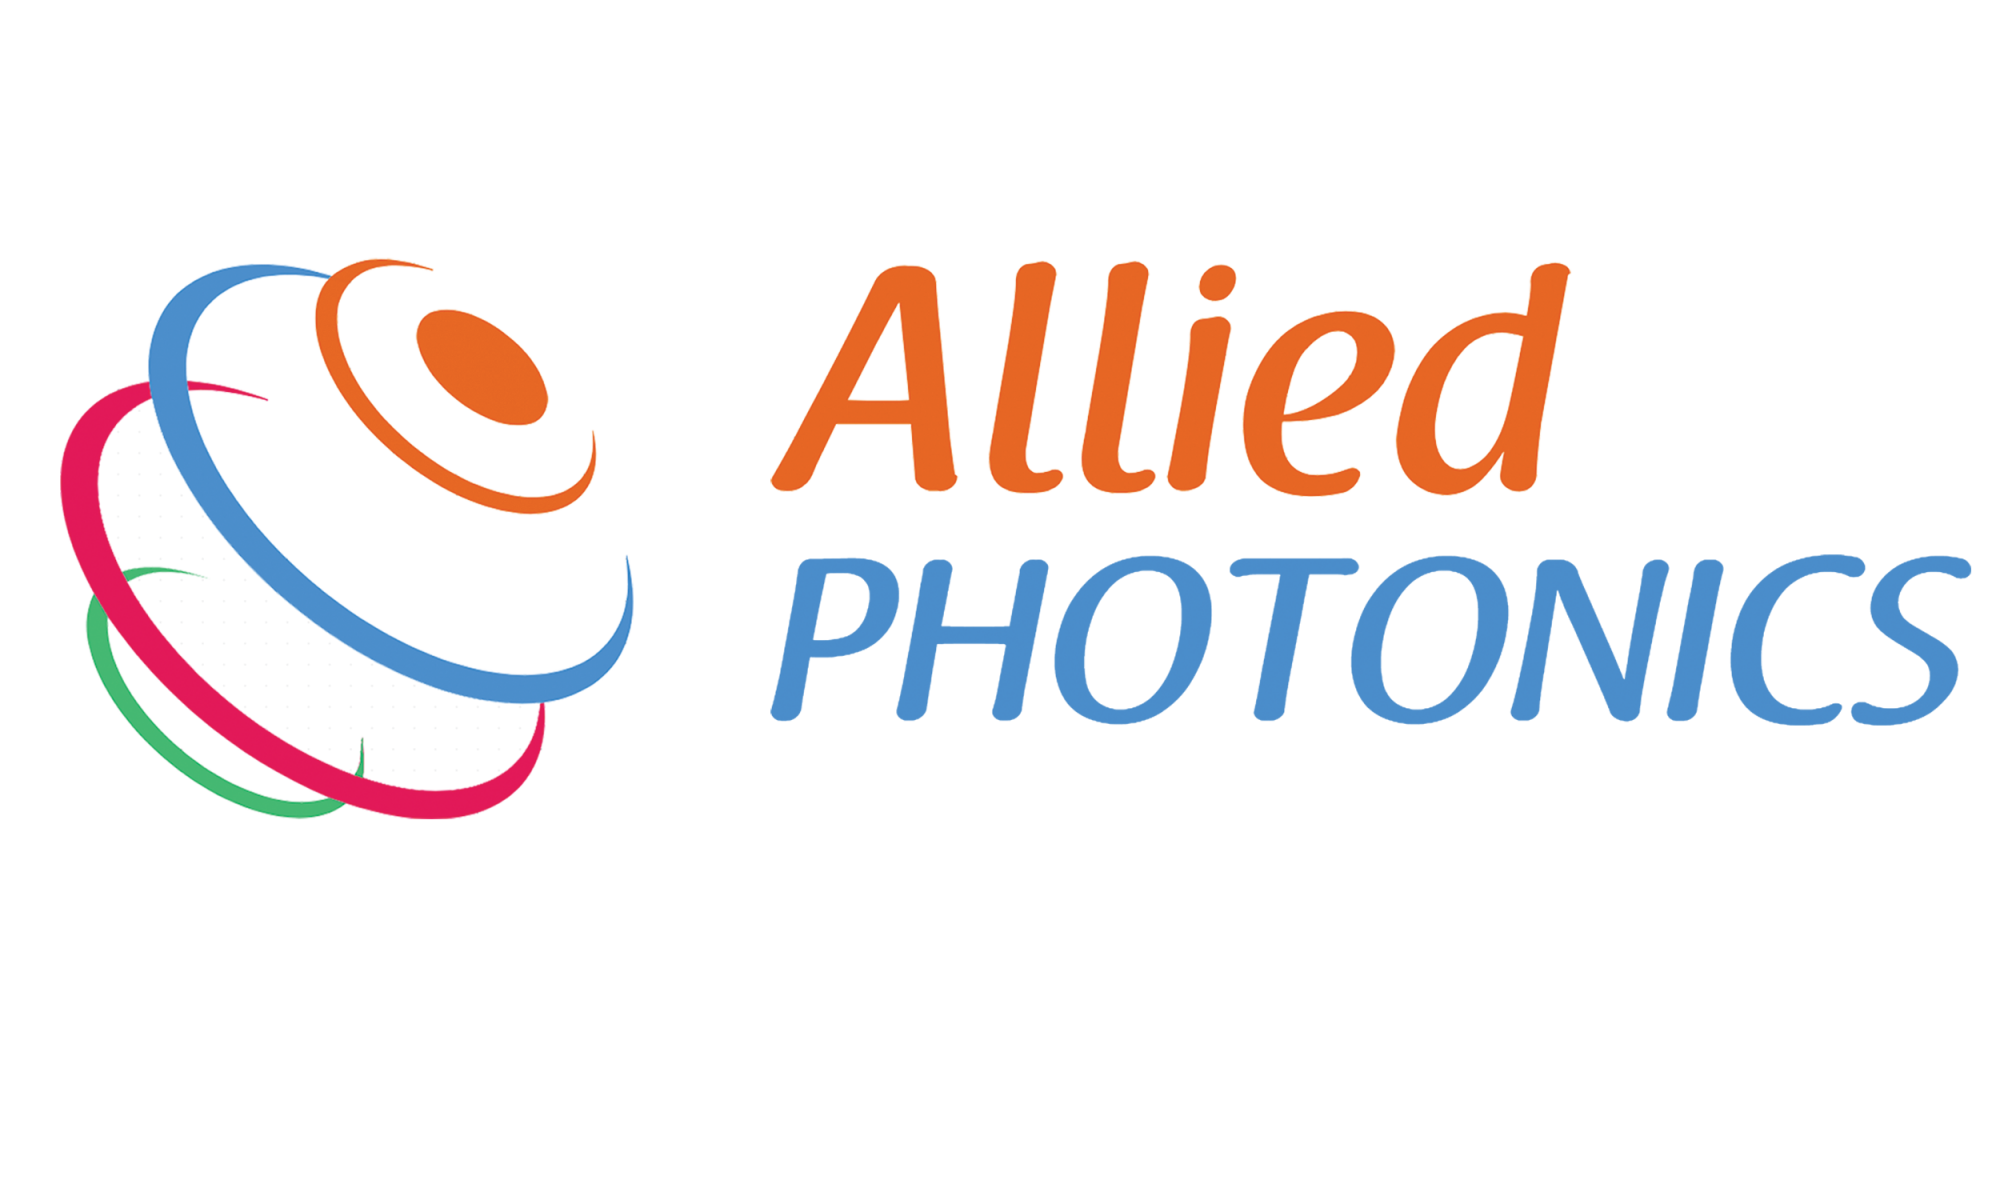 Allied Photonics